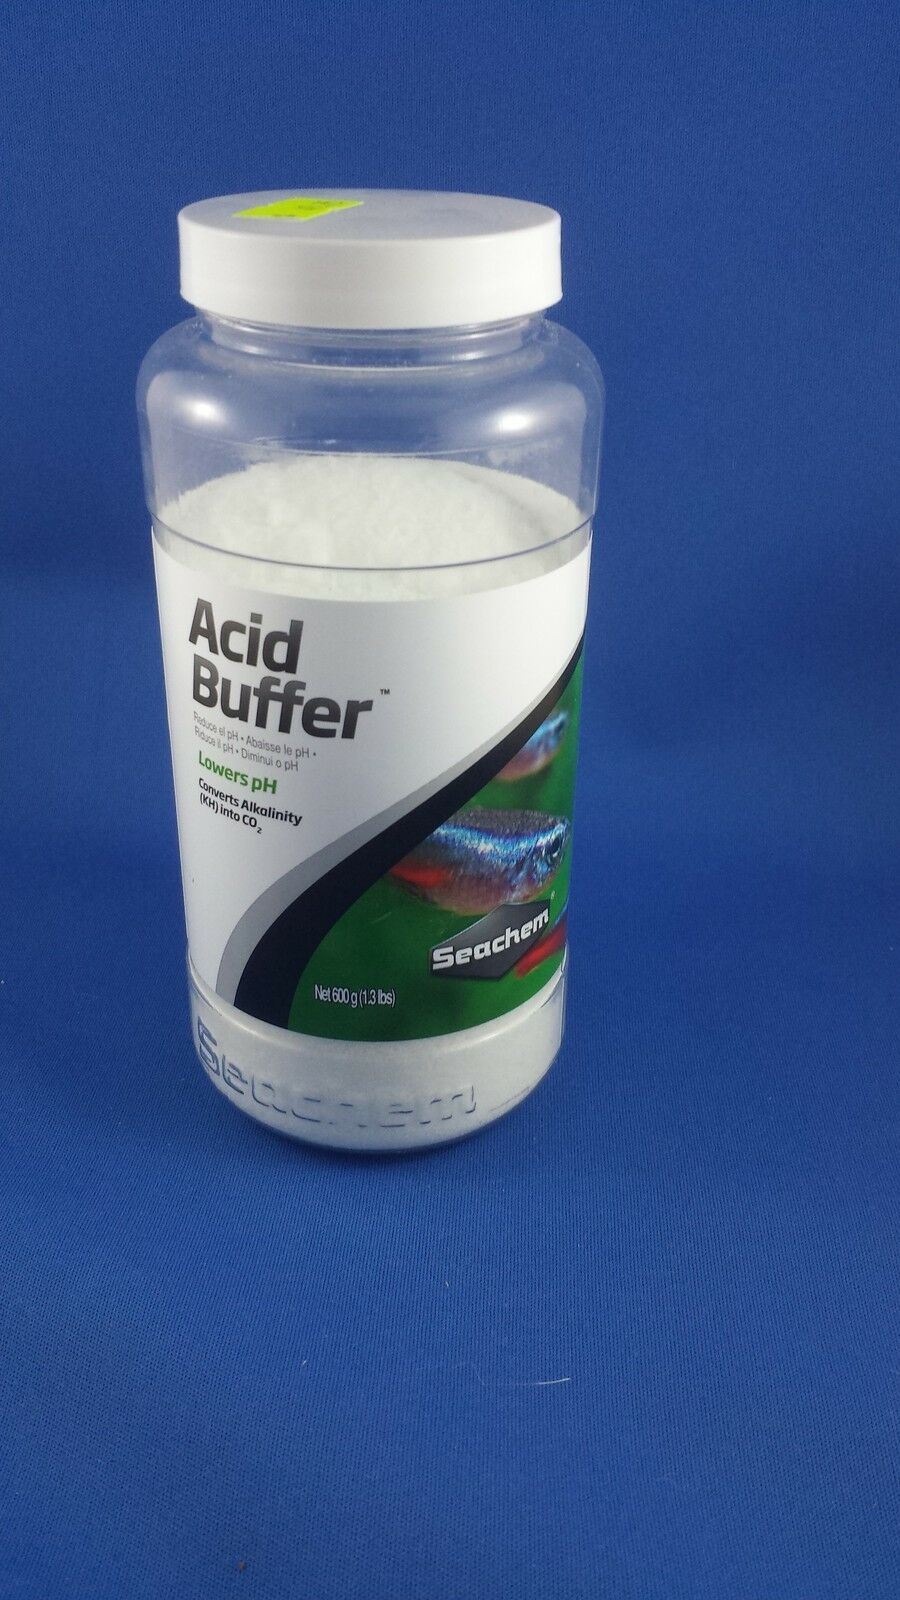 Seachem Acid buffer 600g